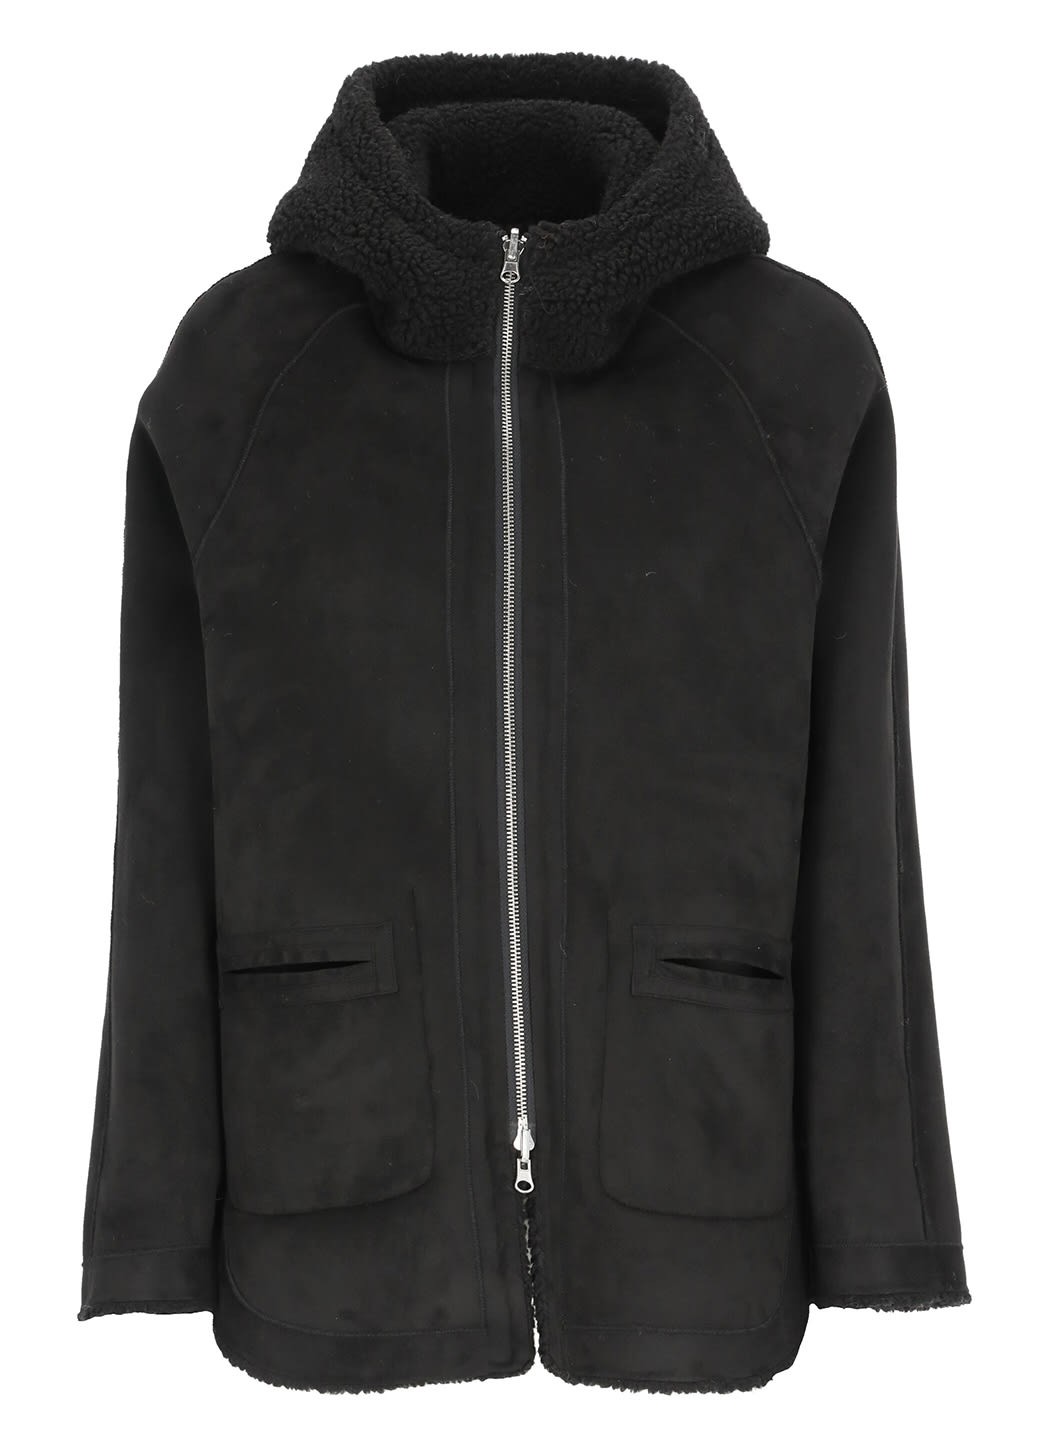 Betta Corradi Eco-shearling Reversible Jacket